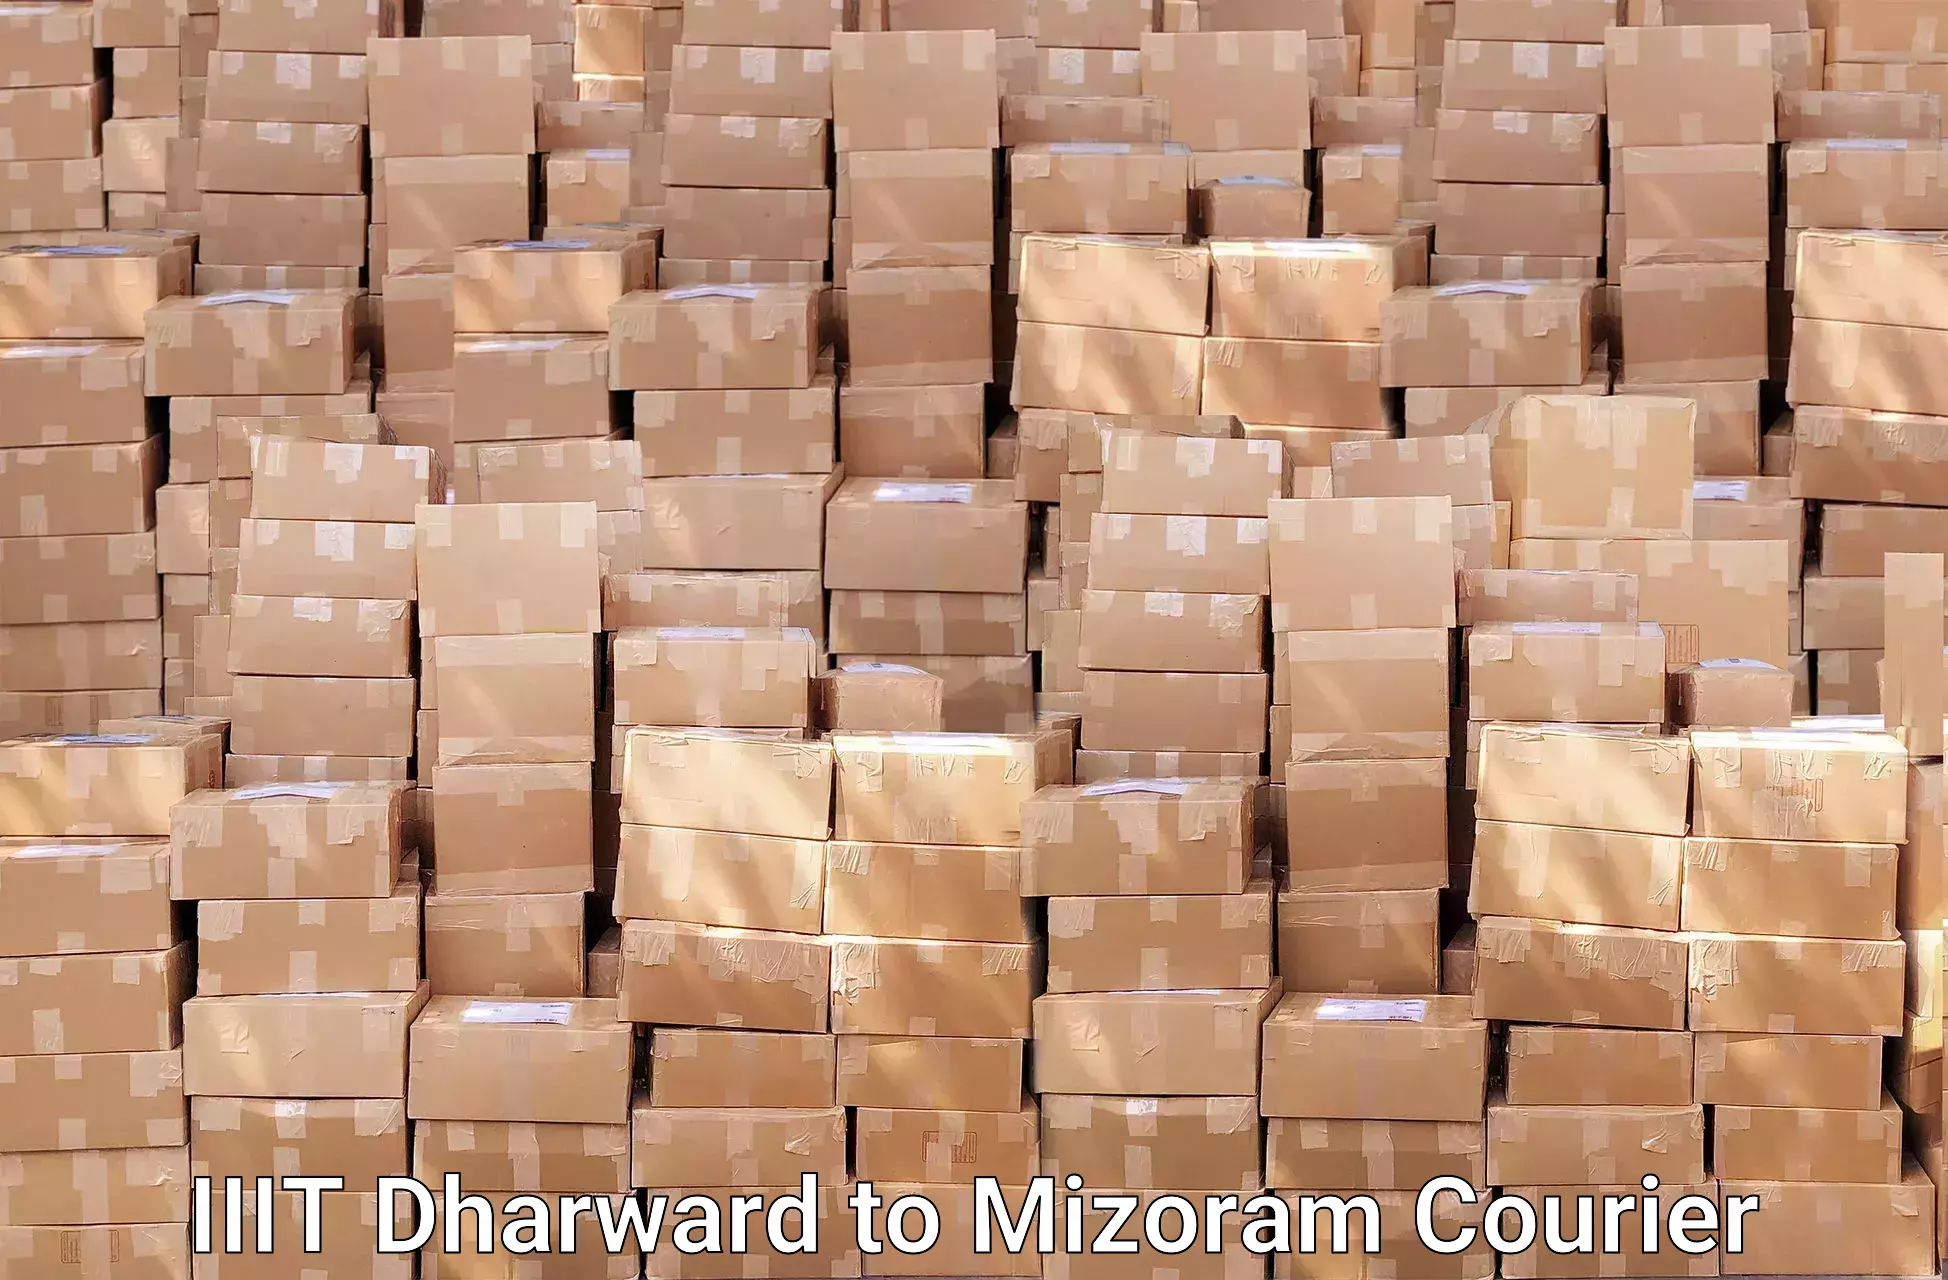 Specialized moving company IIIT Dharward to Mizoram